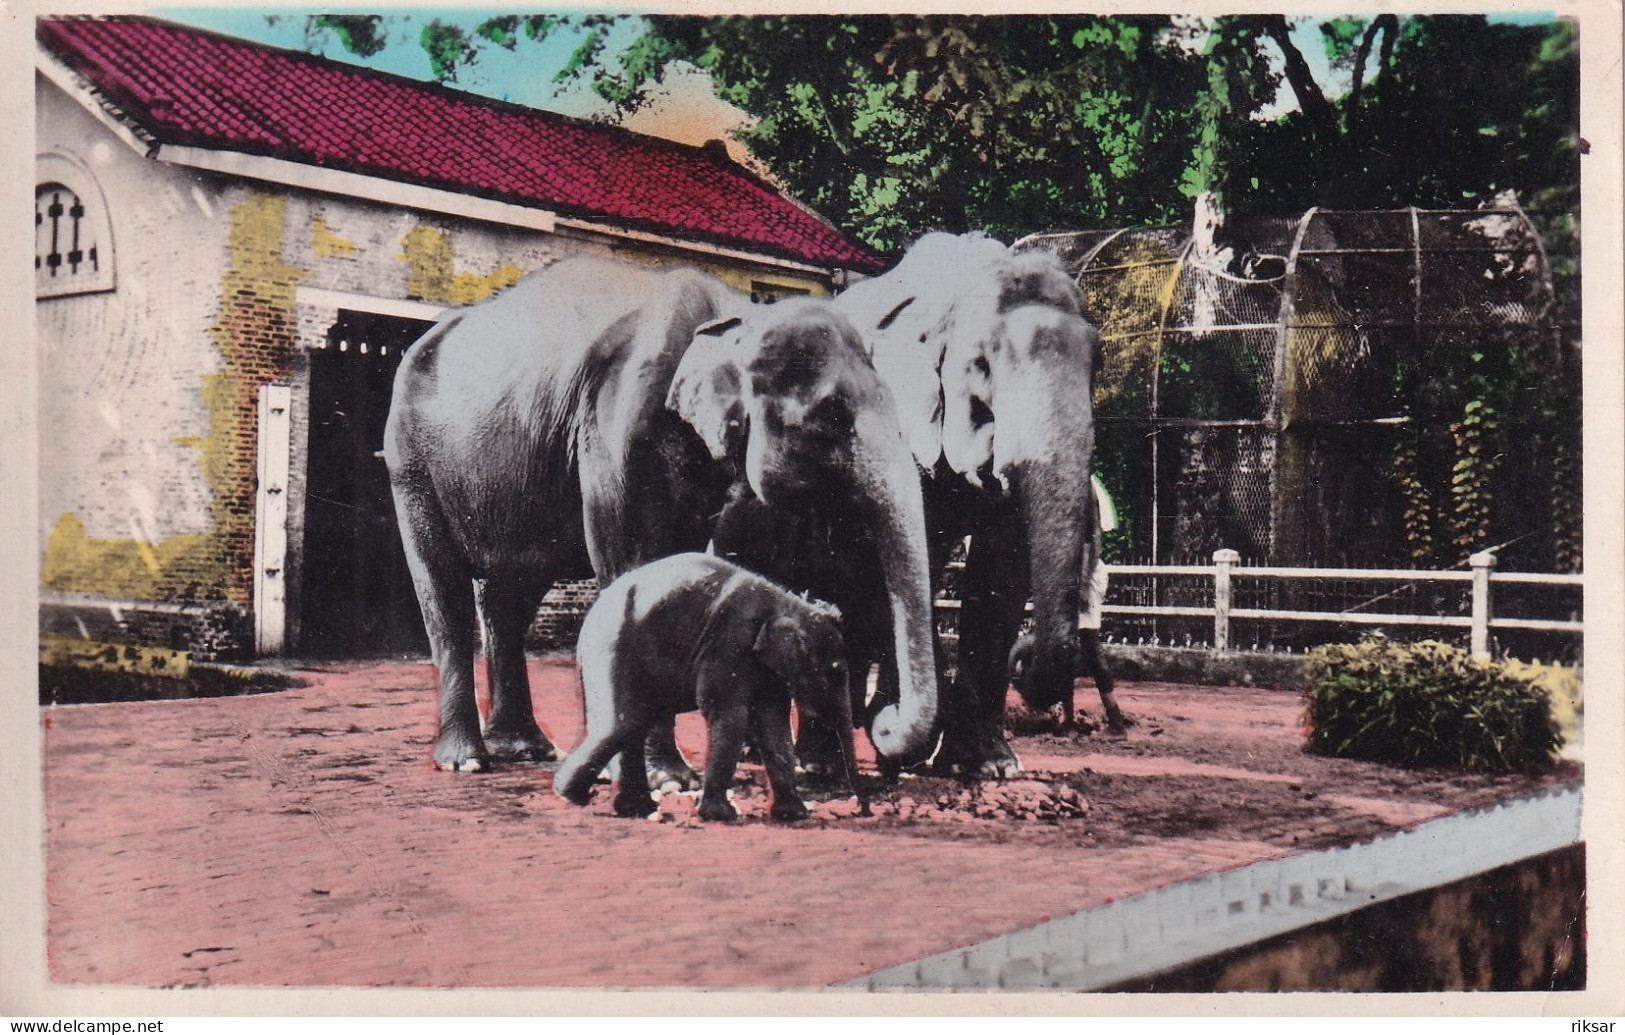 INDOCHINE(SAIGON) ZOO(ELEPHANT) - Vietnam